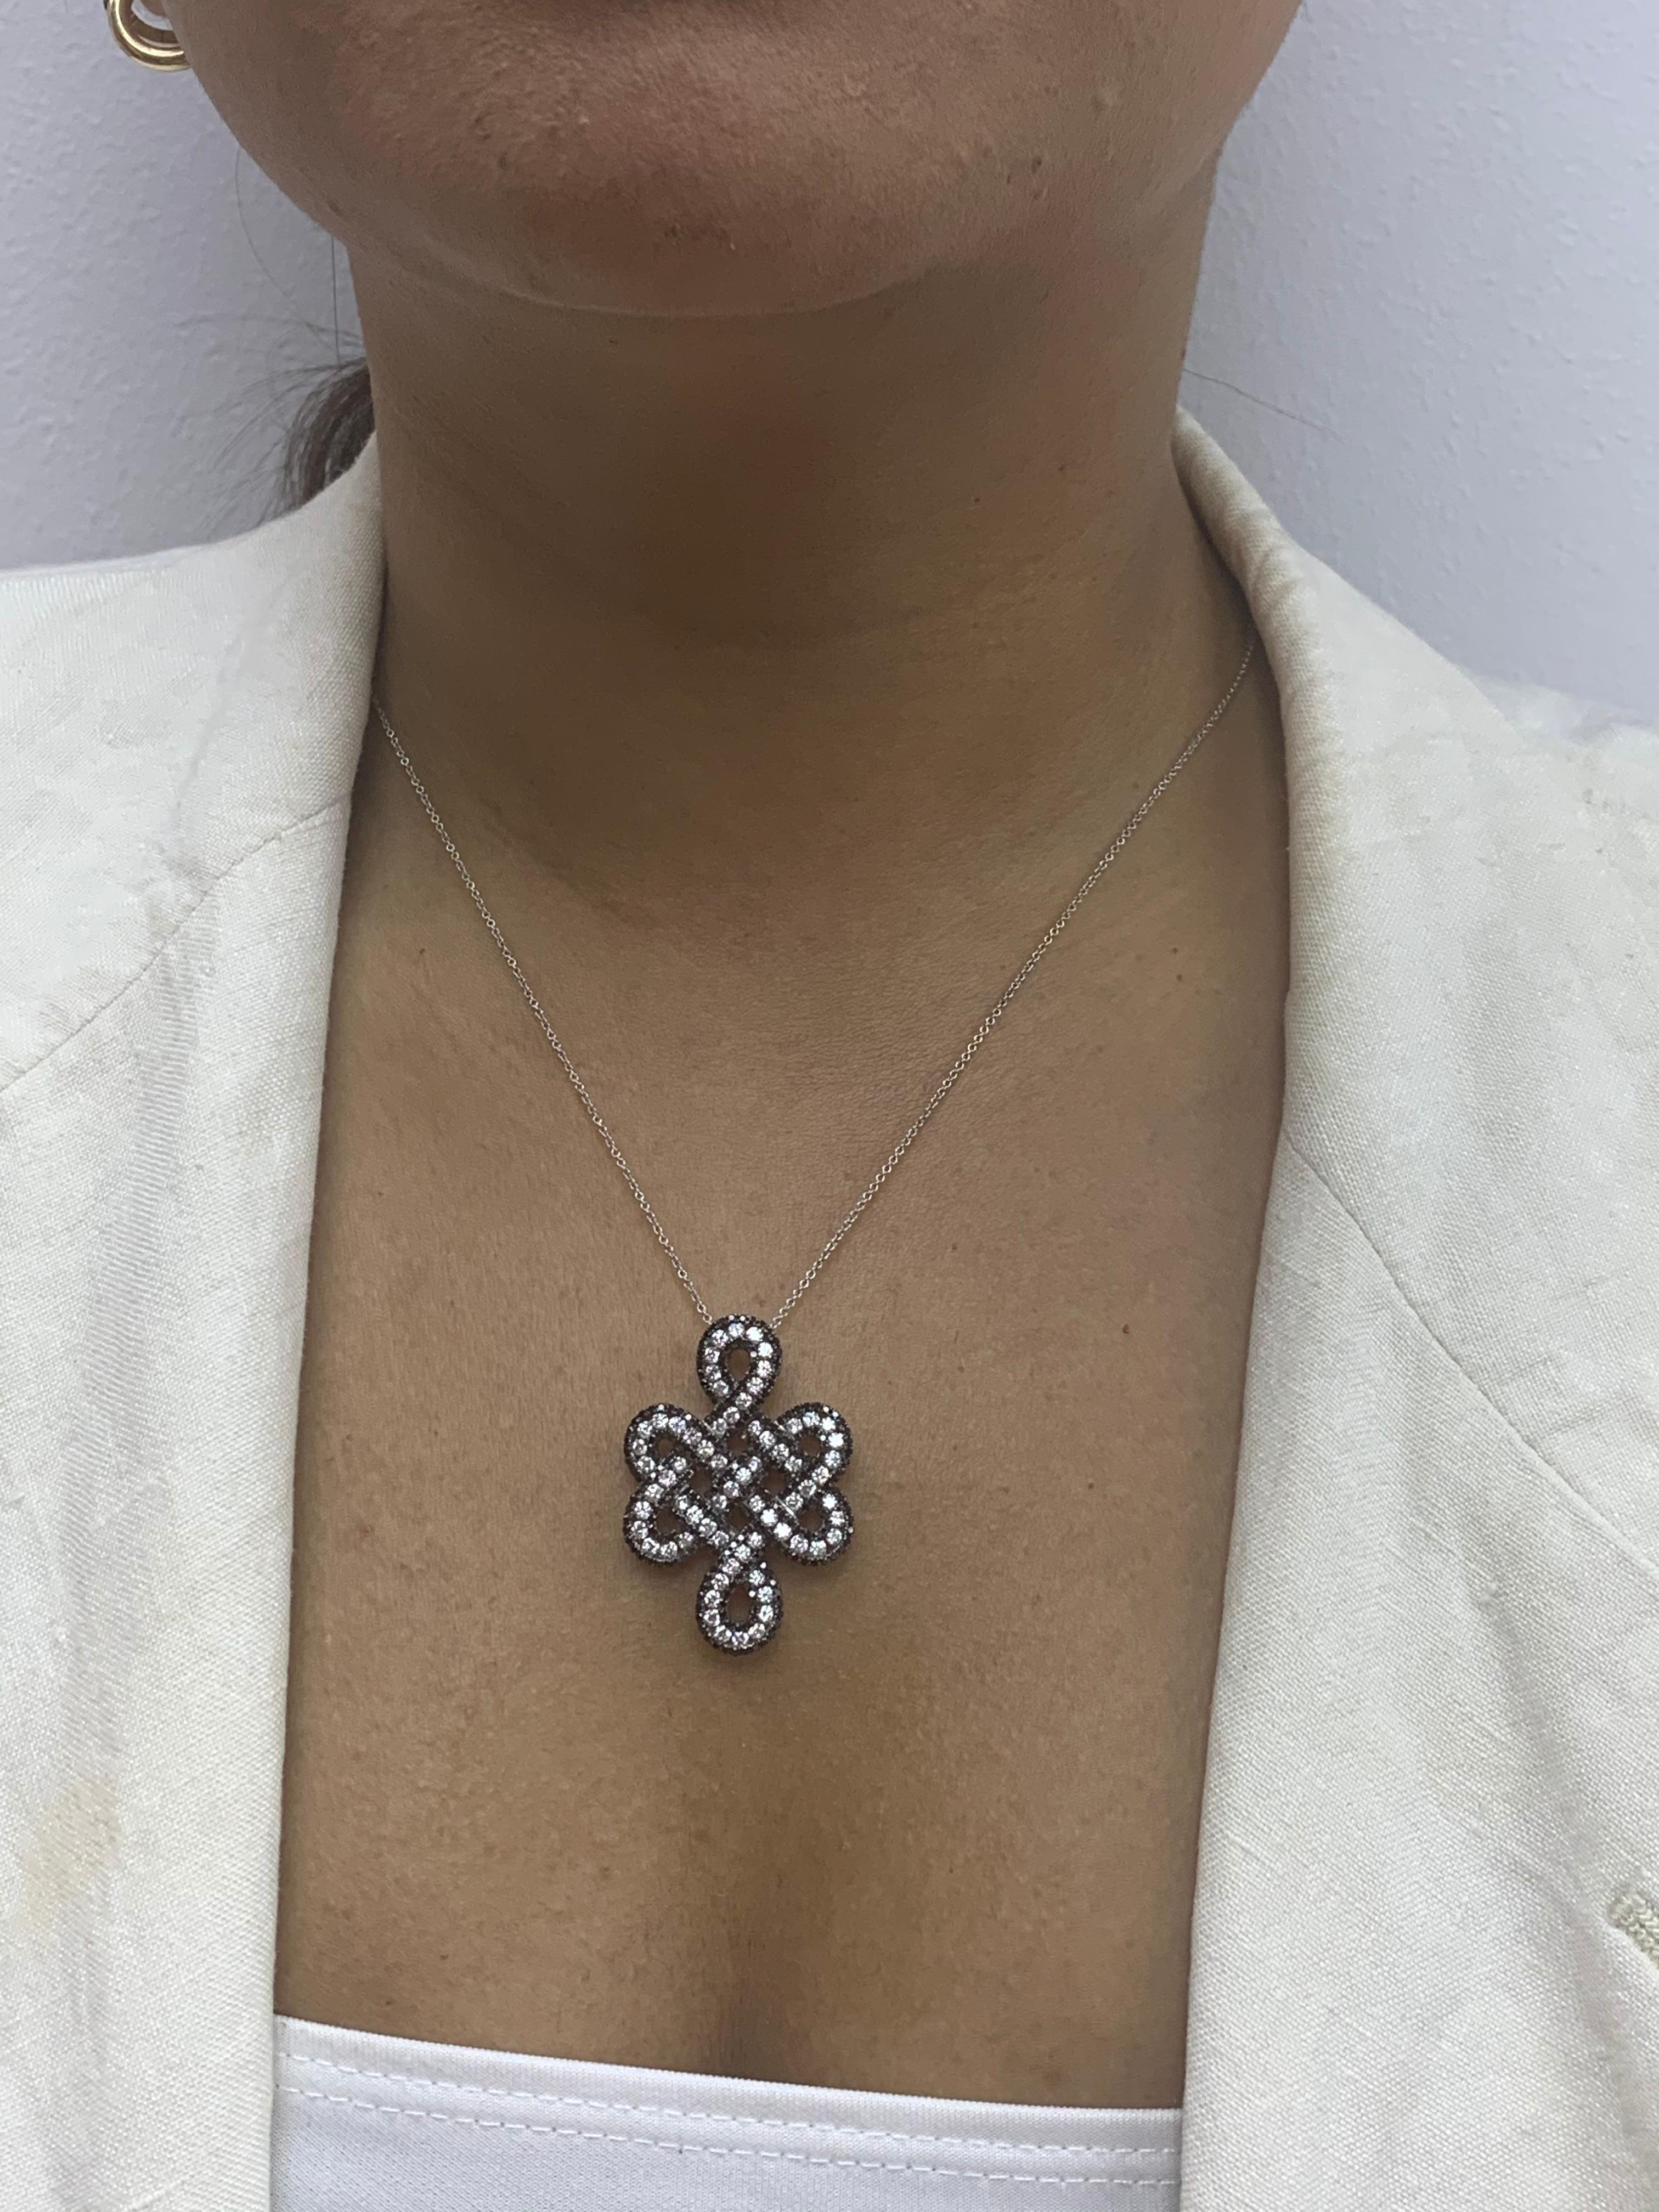 Grandeur 1.31 Carat Fancy Black and White Diamond Pendant Necklace in 18K For Sale 6